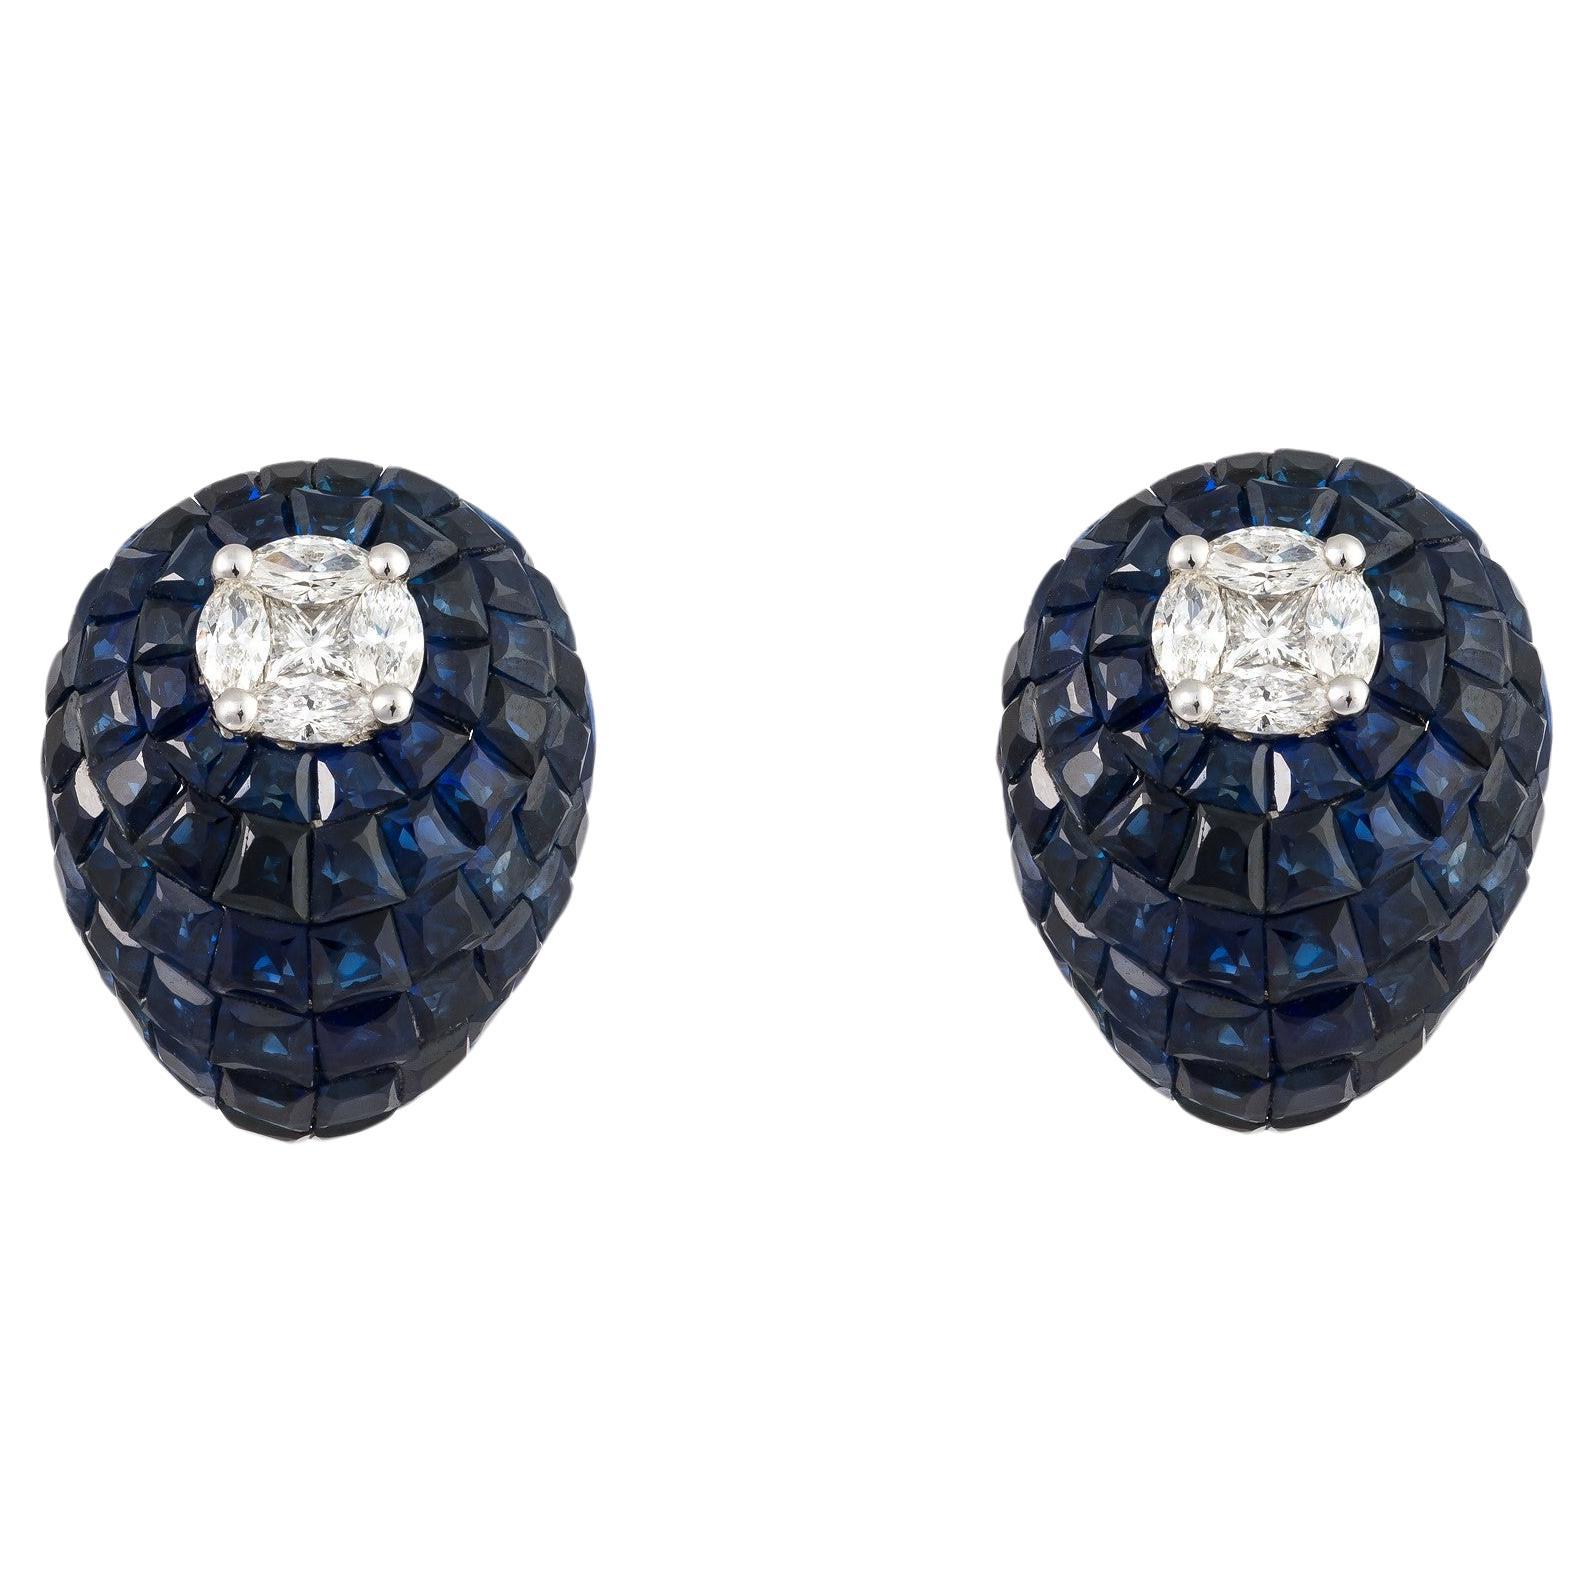 NEU $20, 800 18KT Gold Seltene wunderschöne blaue Saphir-Diamant-Bomber-Ohrringe, NEU